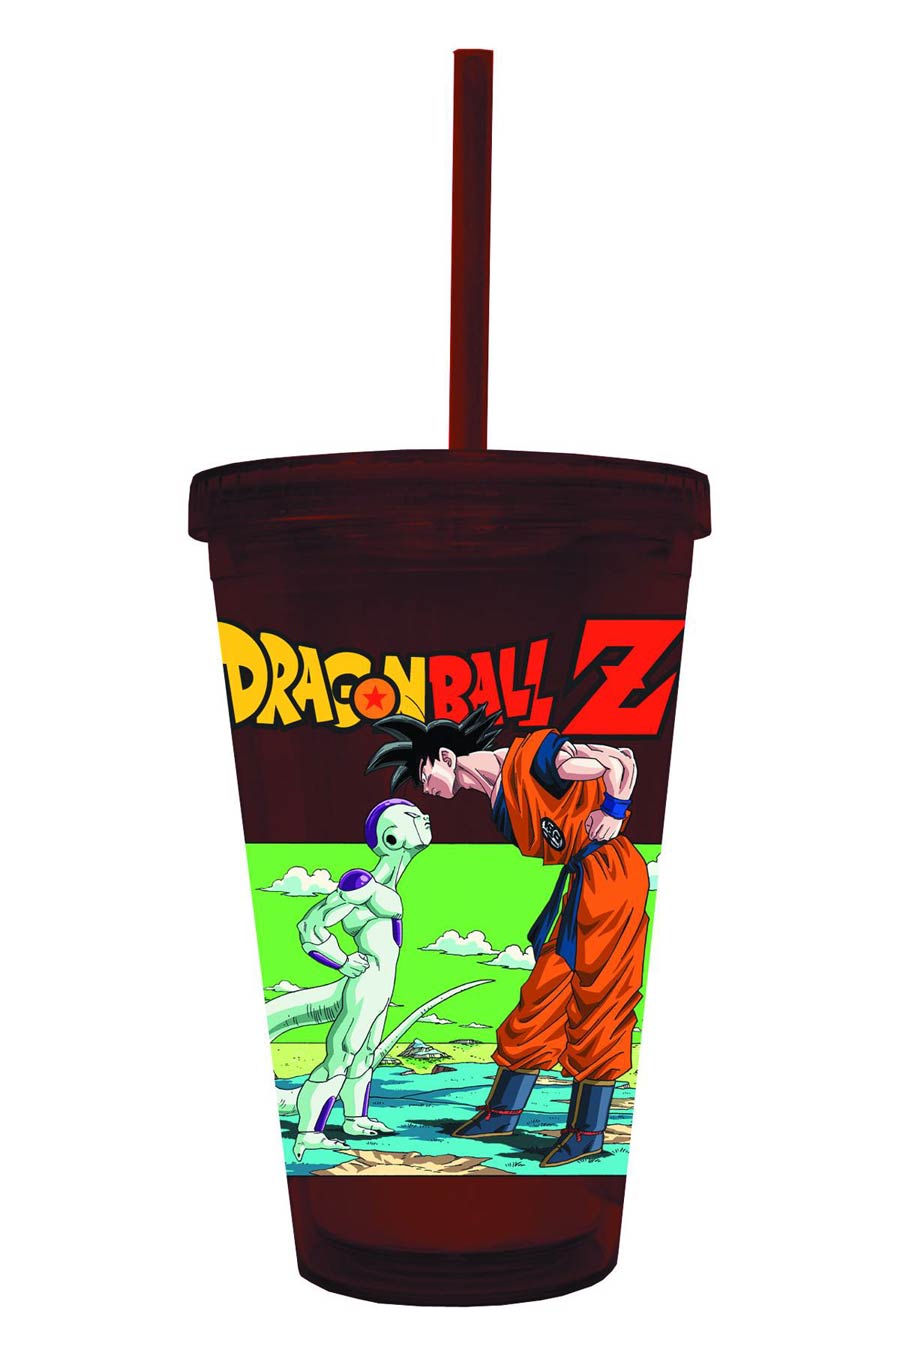 Dragon Ball Z Carnival Cup - Frieza vs Goku